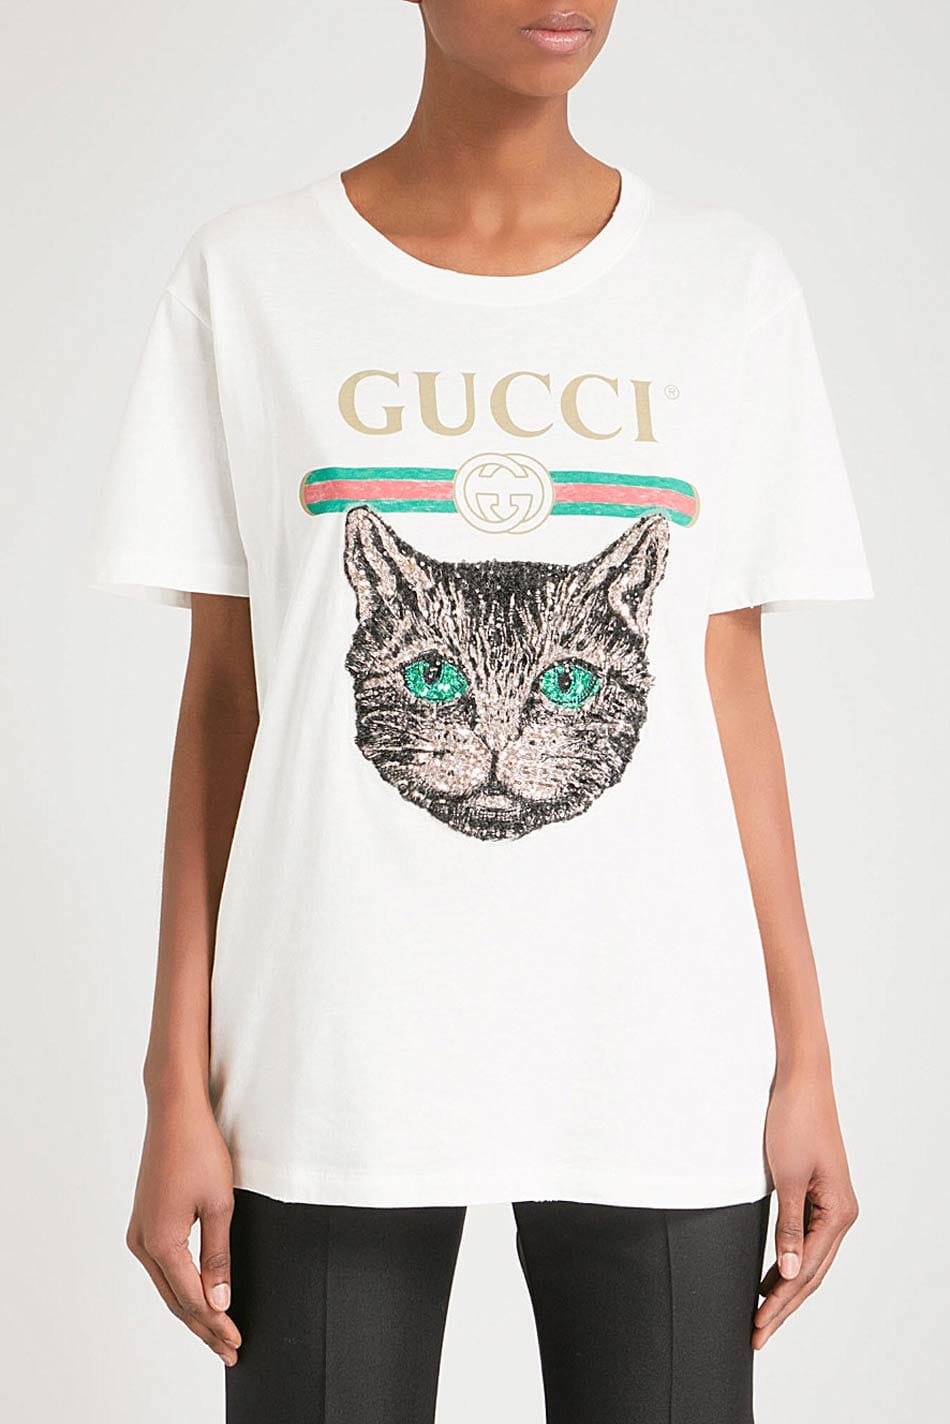 gucci cat shirt black